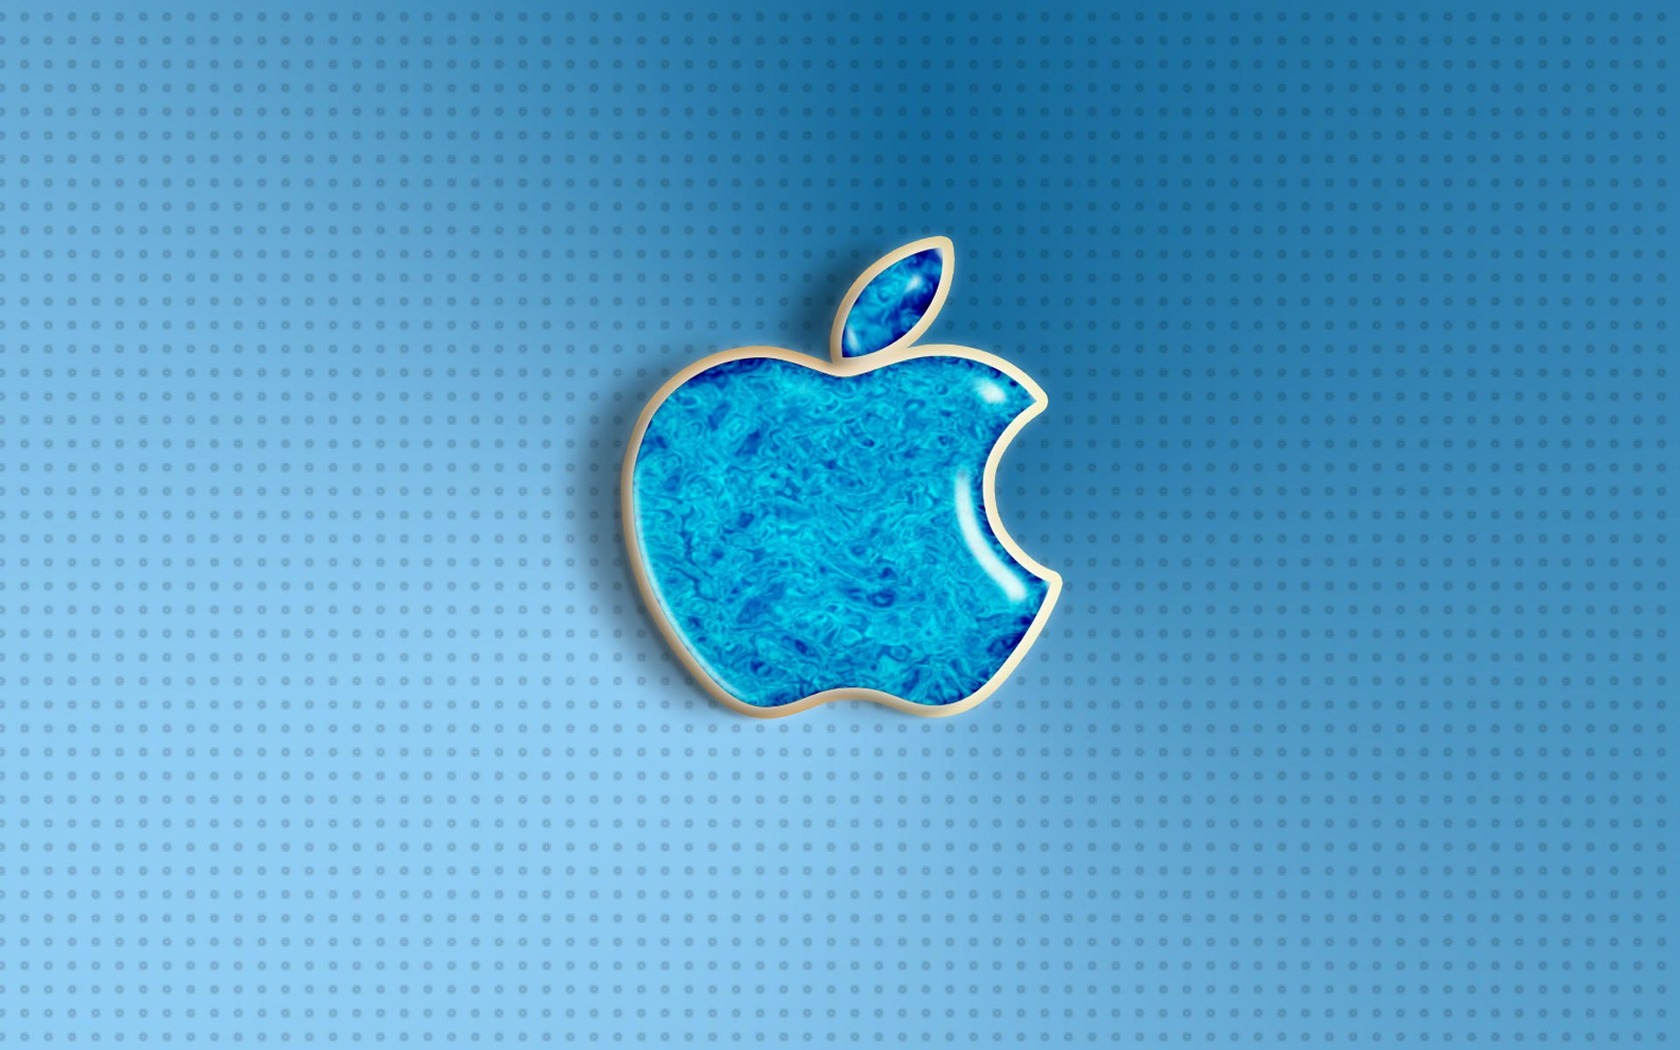 Blue Apple logo wallpaper 526